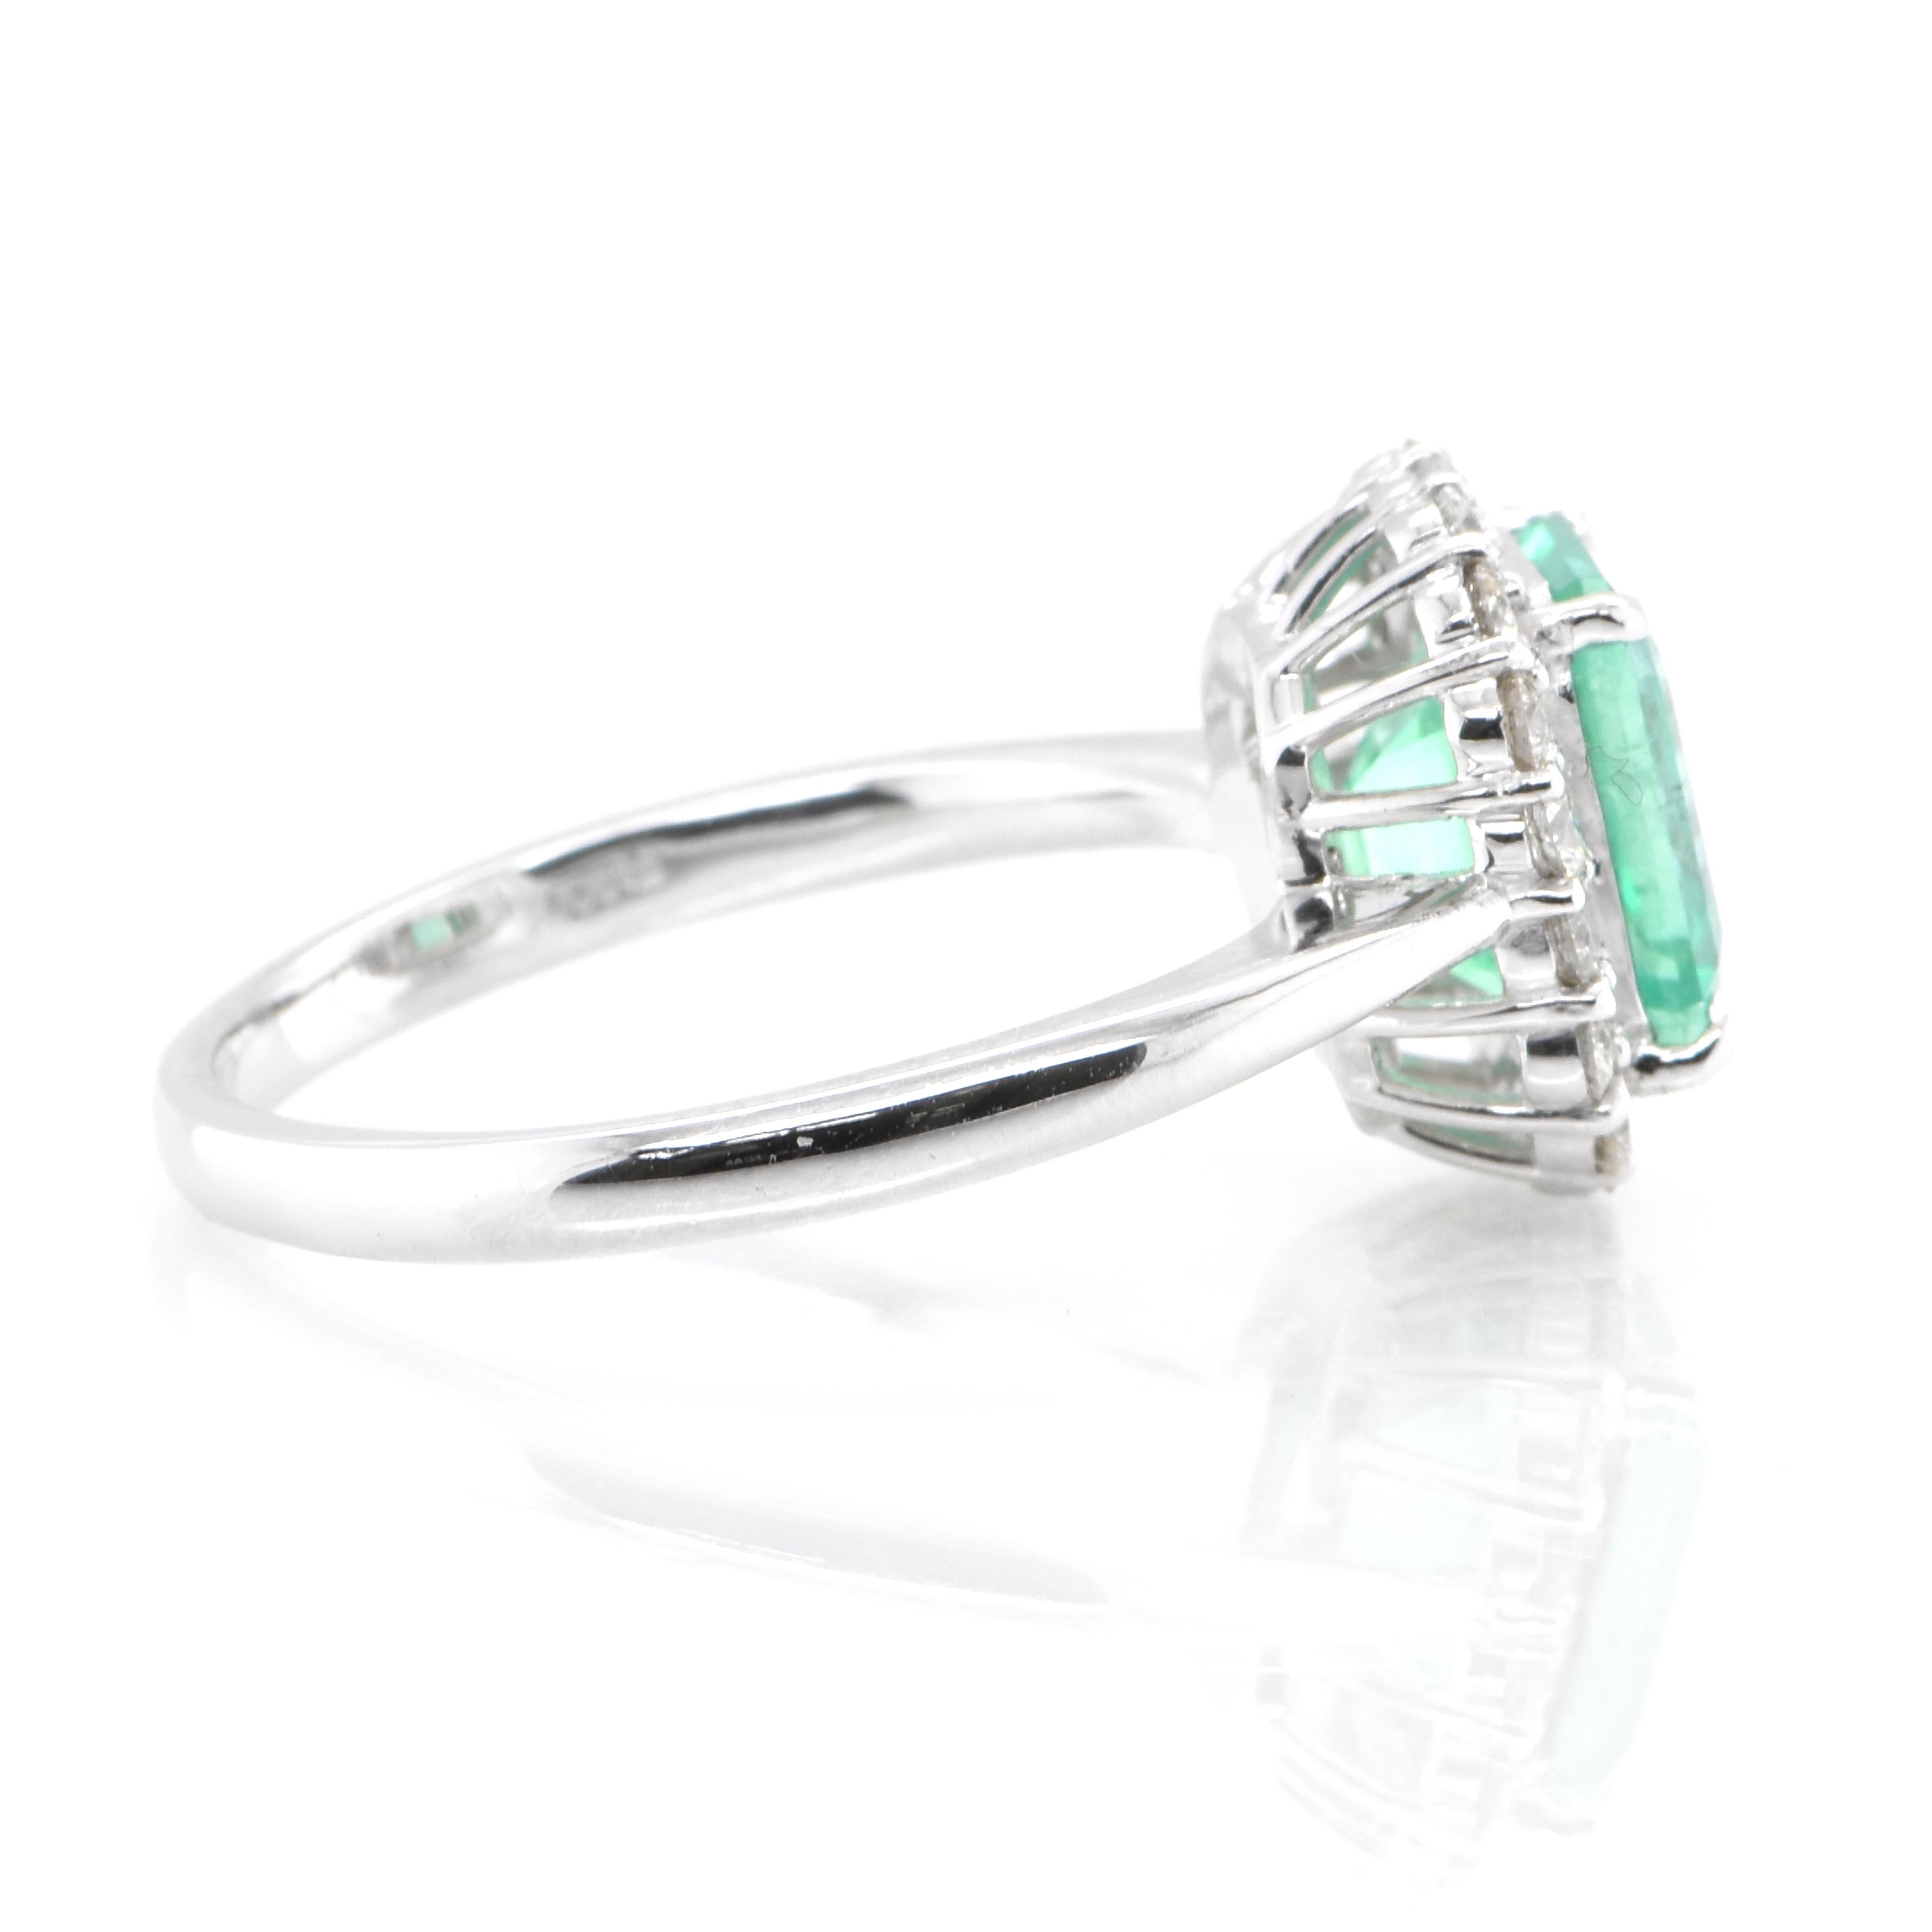 Emerald Cut 1.93 Carat Natural Emerald and Diamond Halo Cocktail Ring Set in Platinum